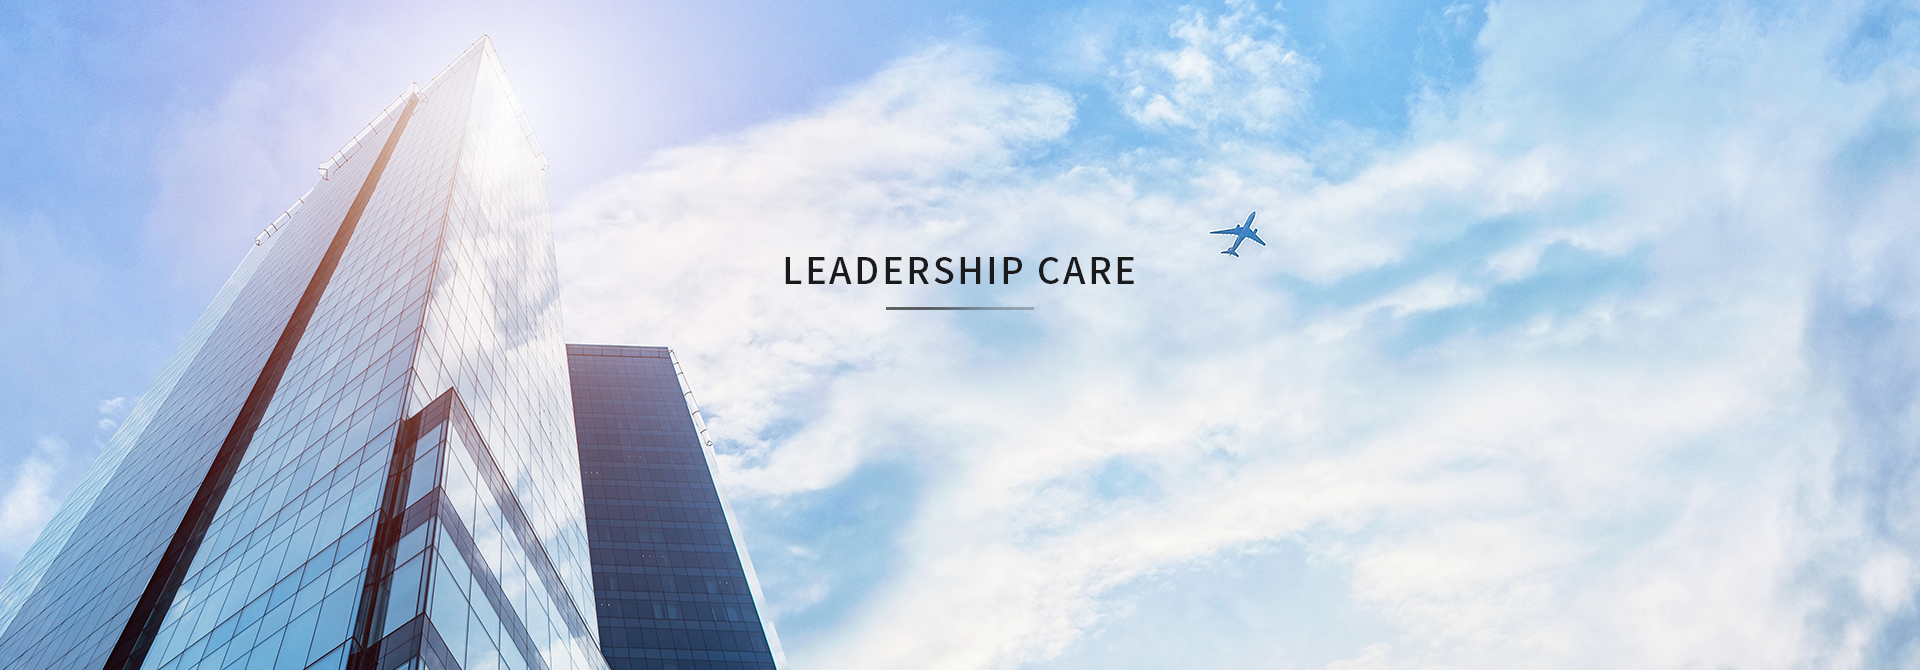 Leadership care